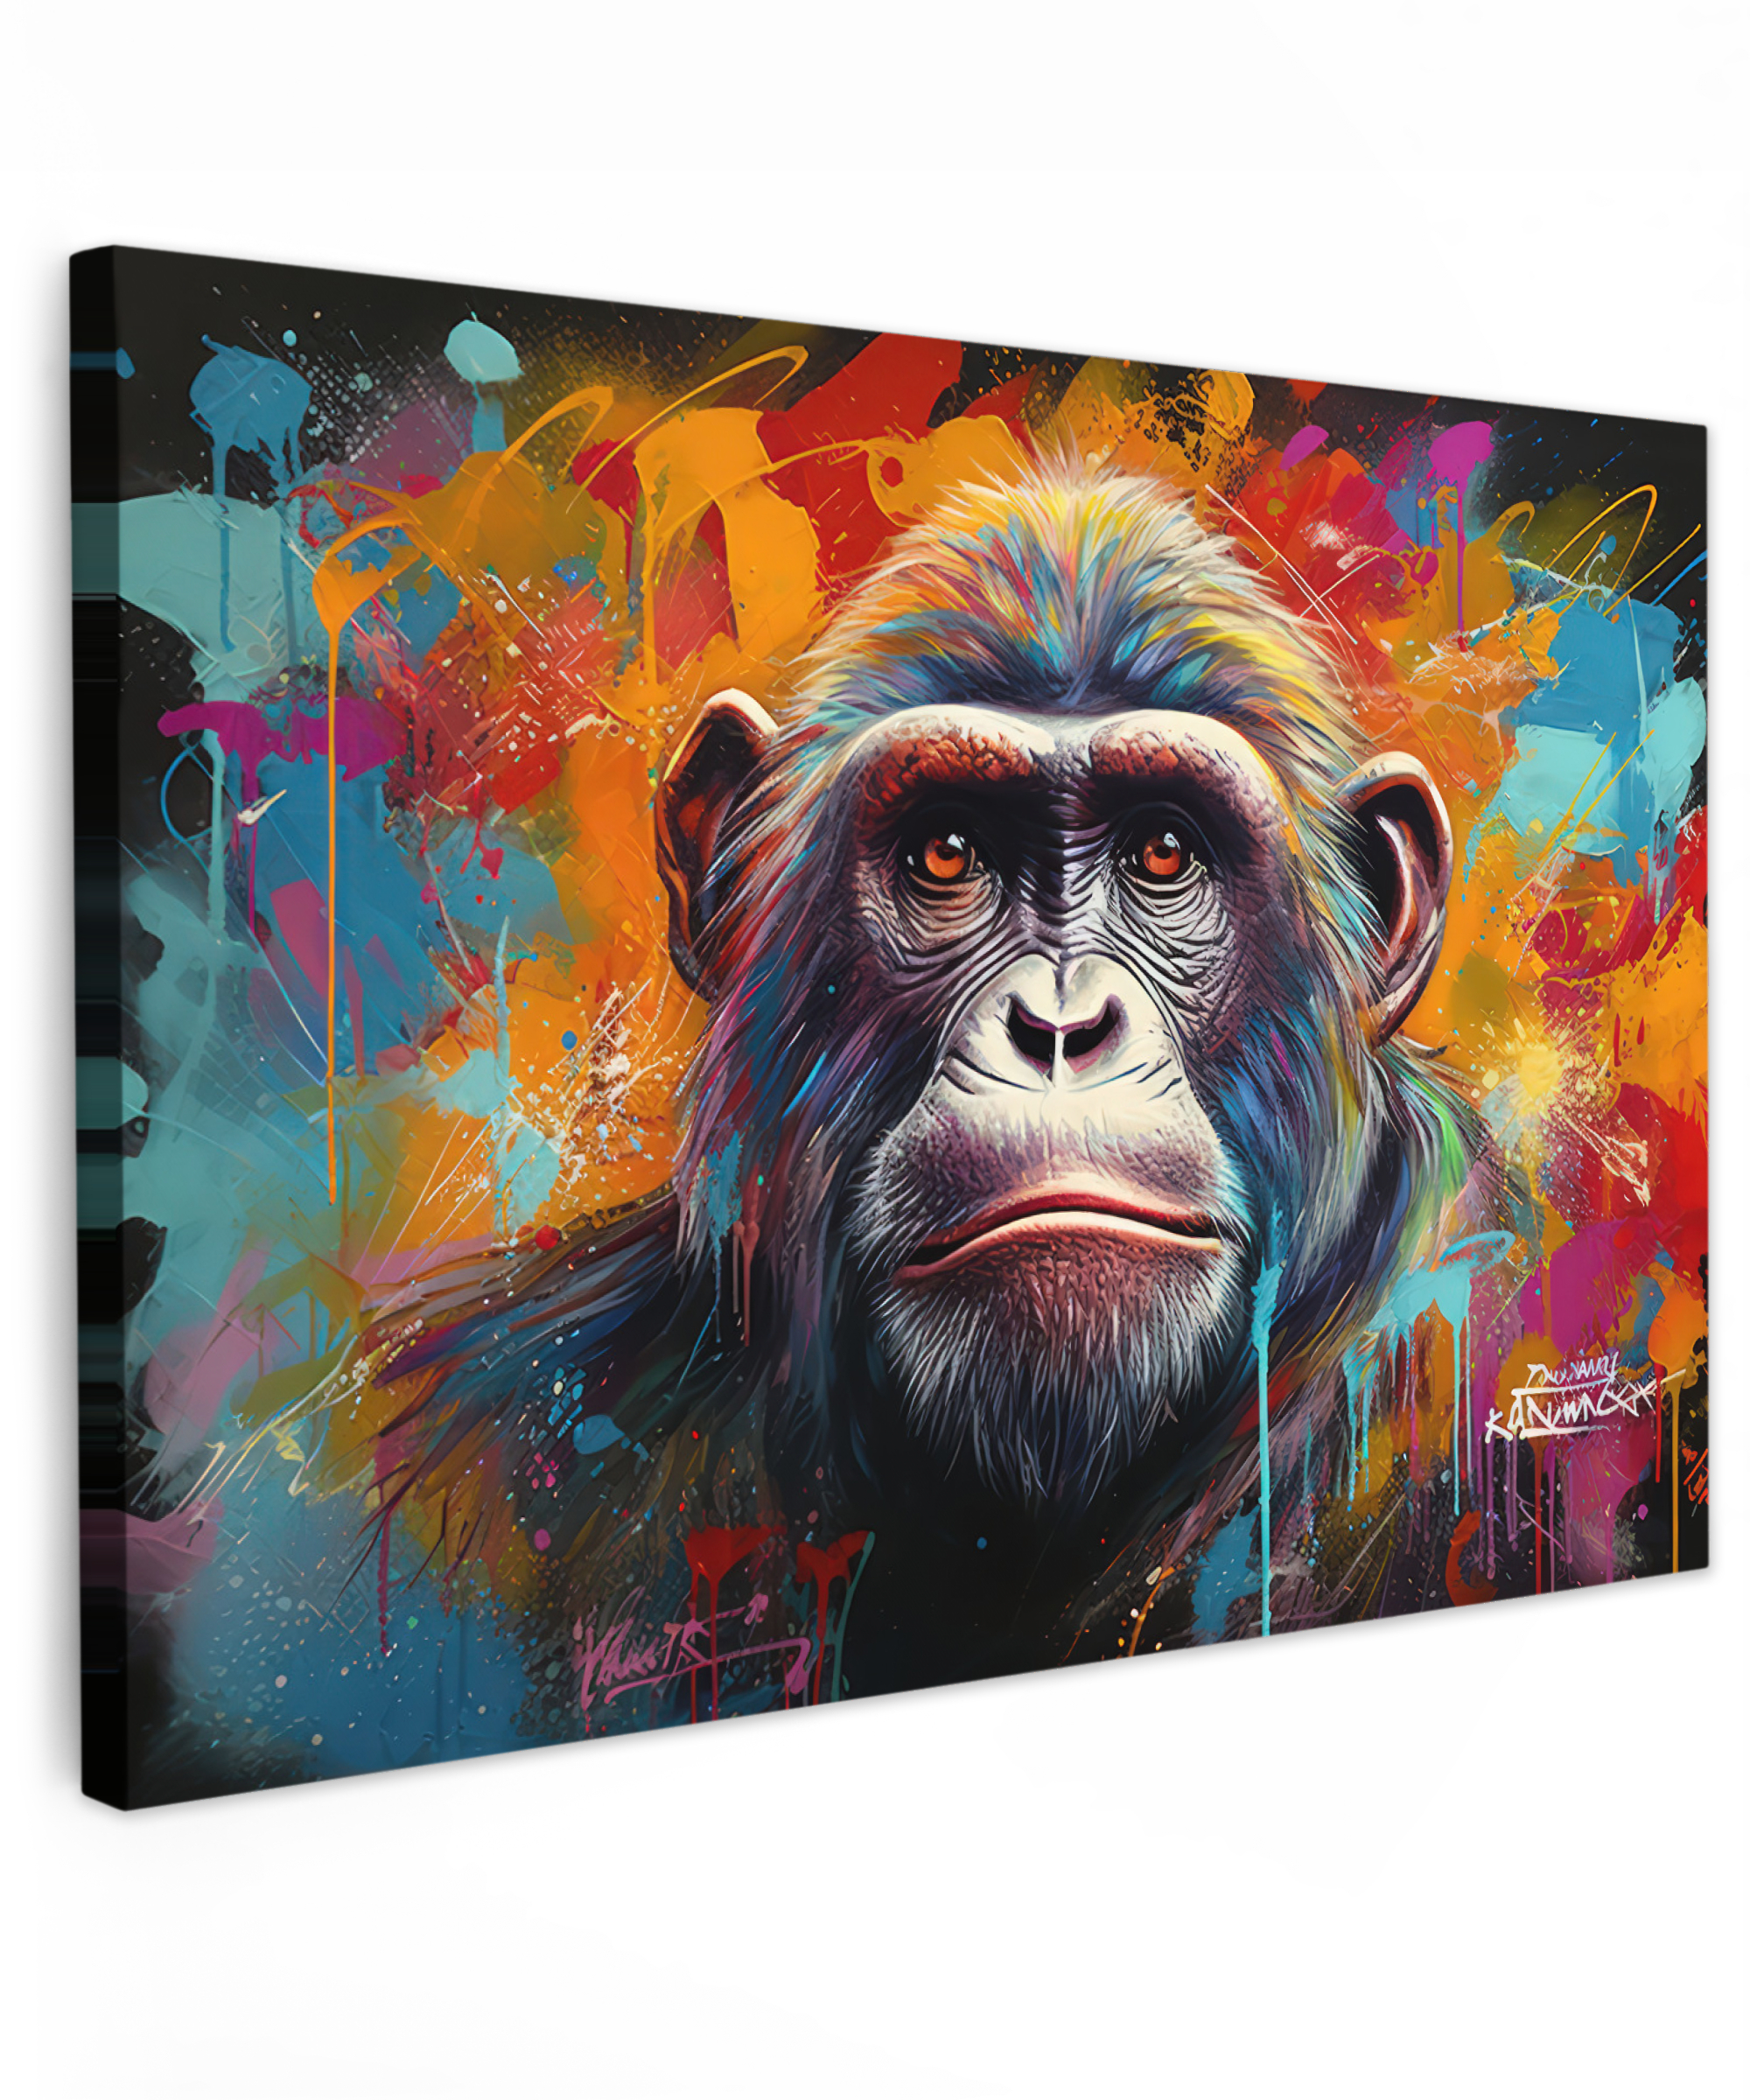 Canvas schilderij - Aap - Gorilla - Graffiti - Dieren - Kleuren